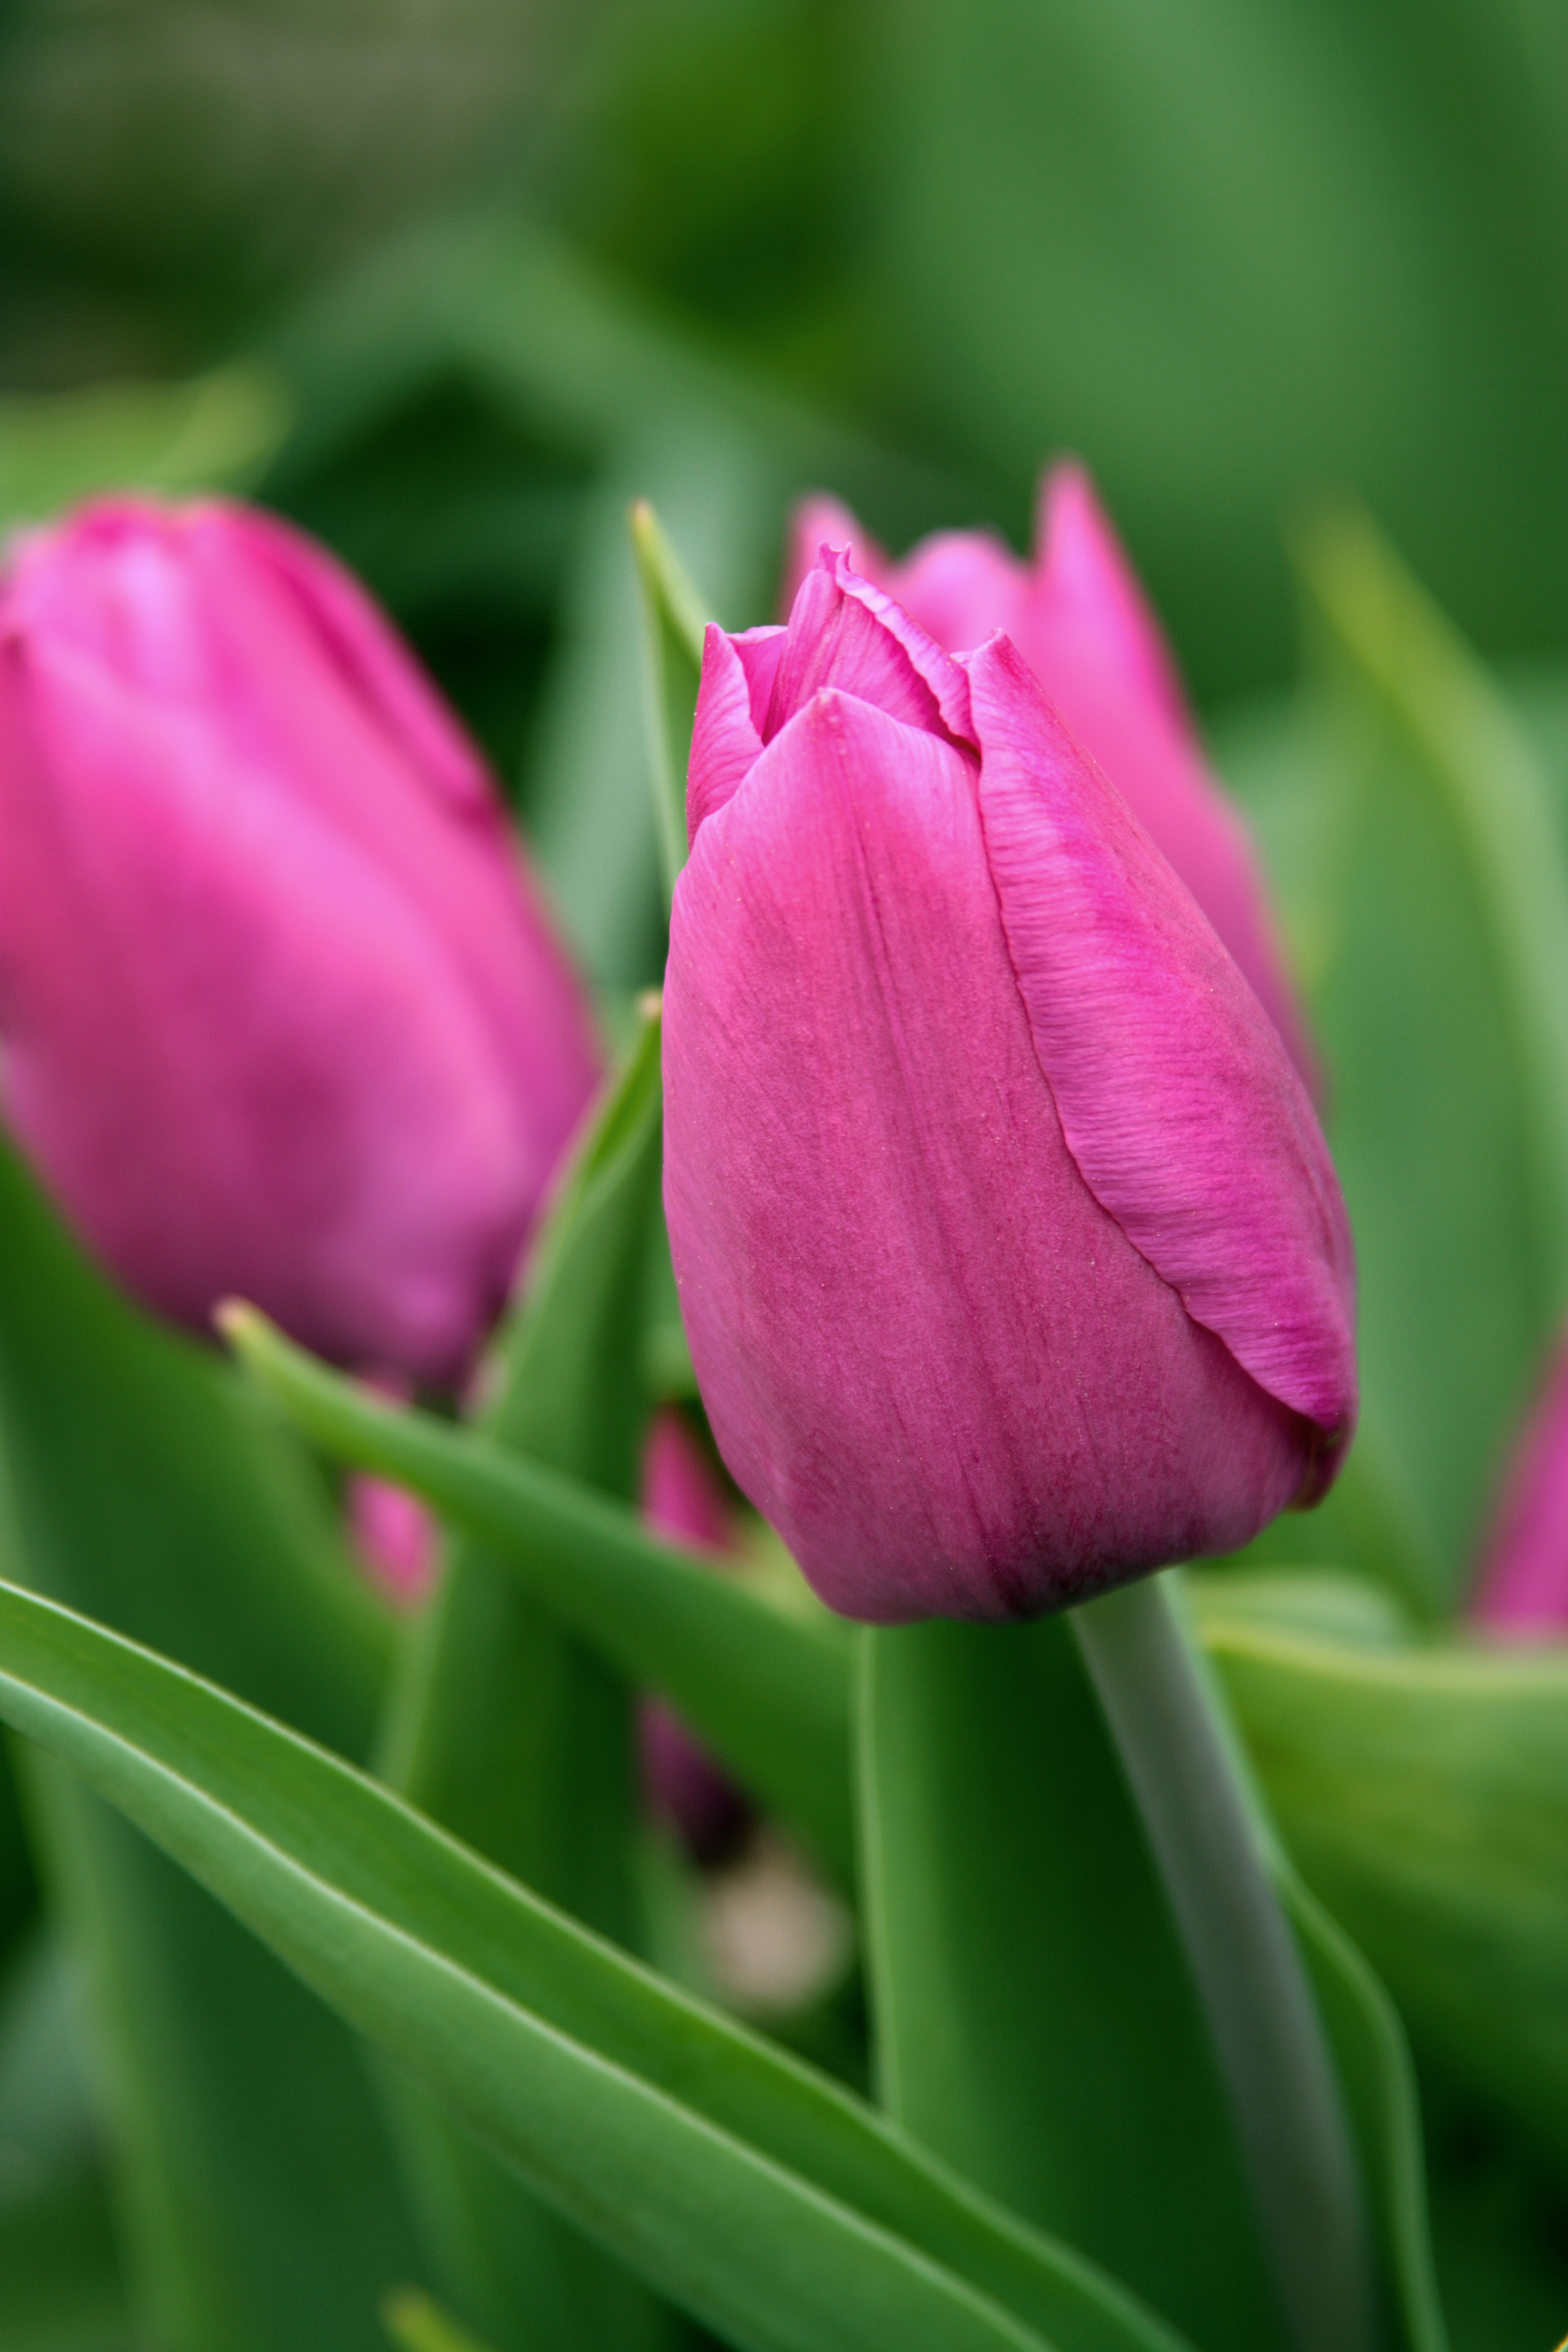 File:Pink Tulip.jpg - Wikimedia Commons